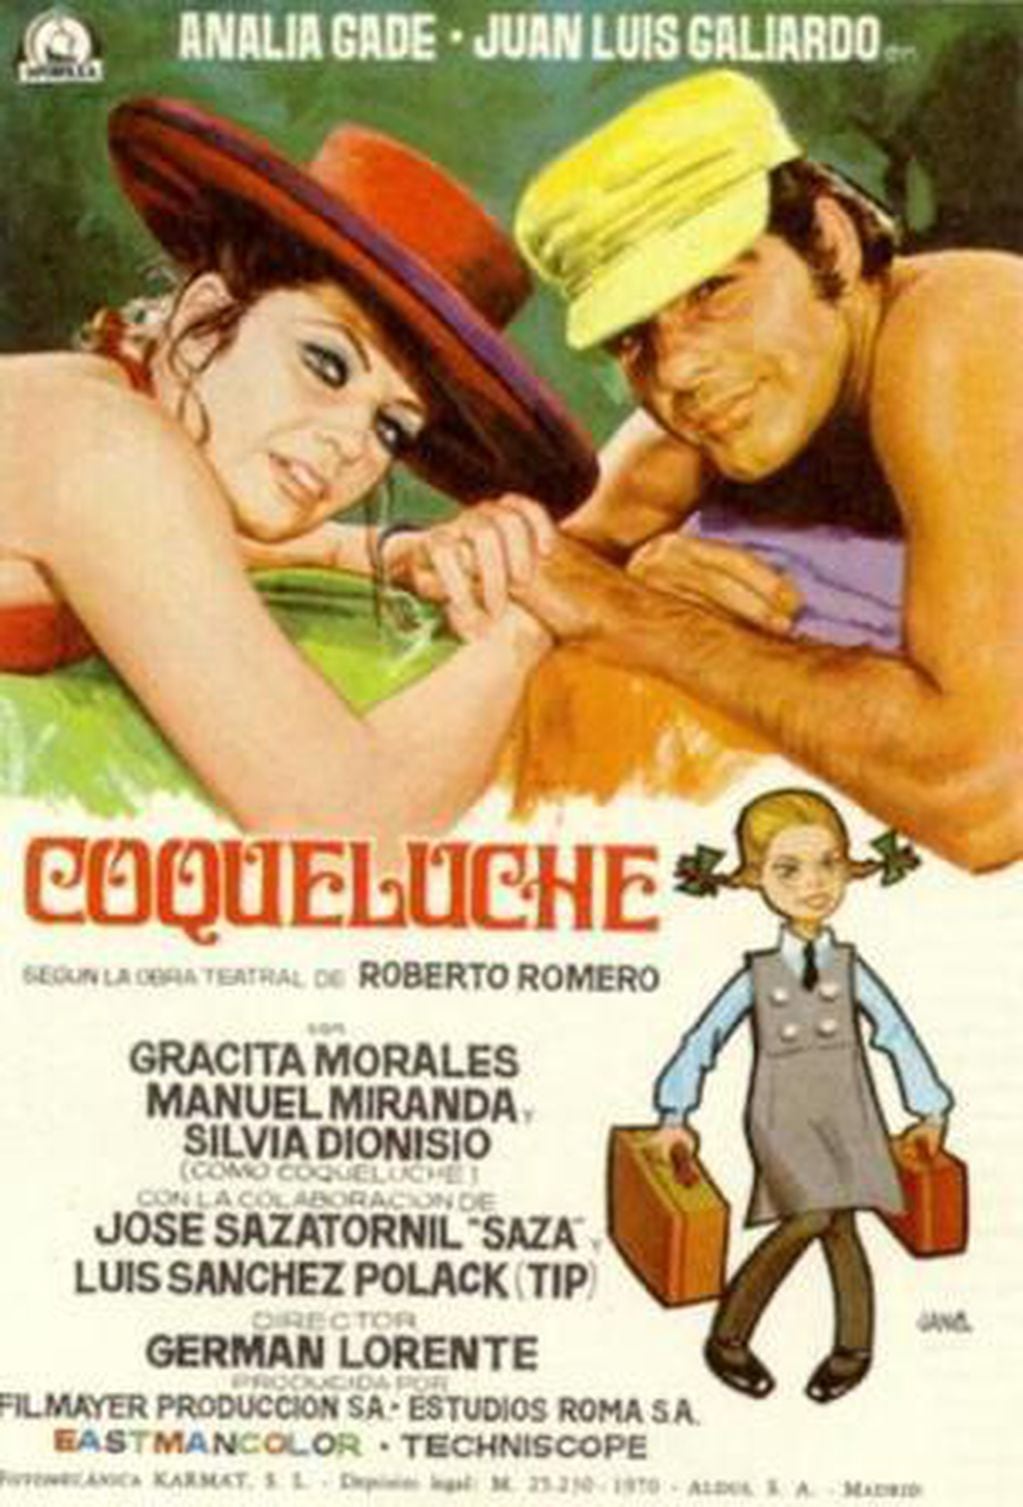 Película española de 1970 que inspiró la obra de Muscari